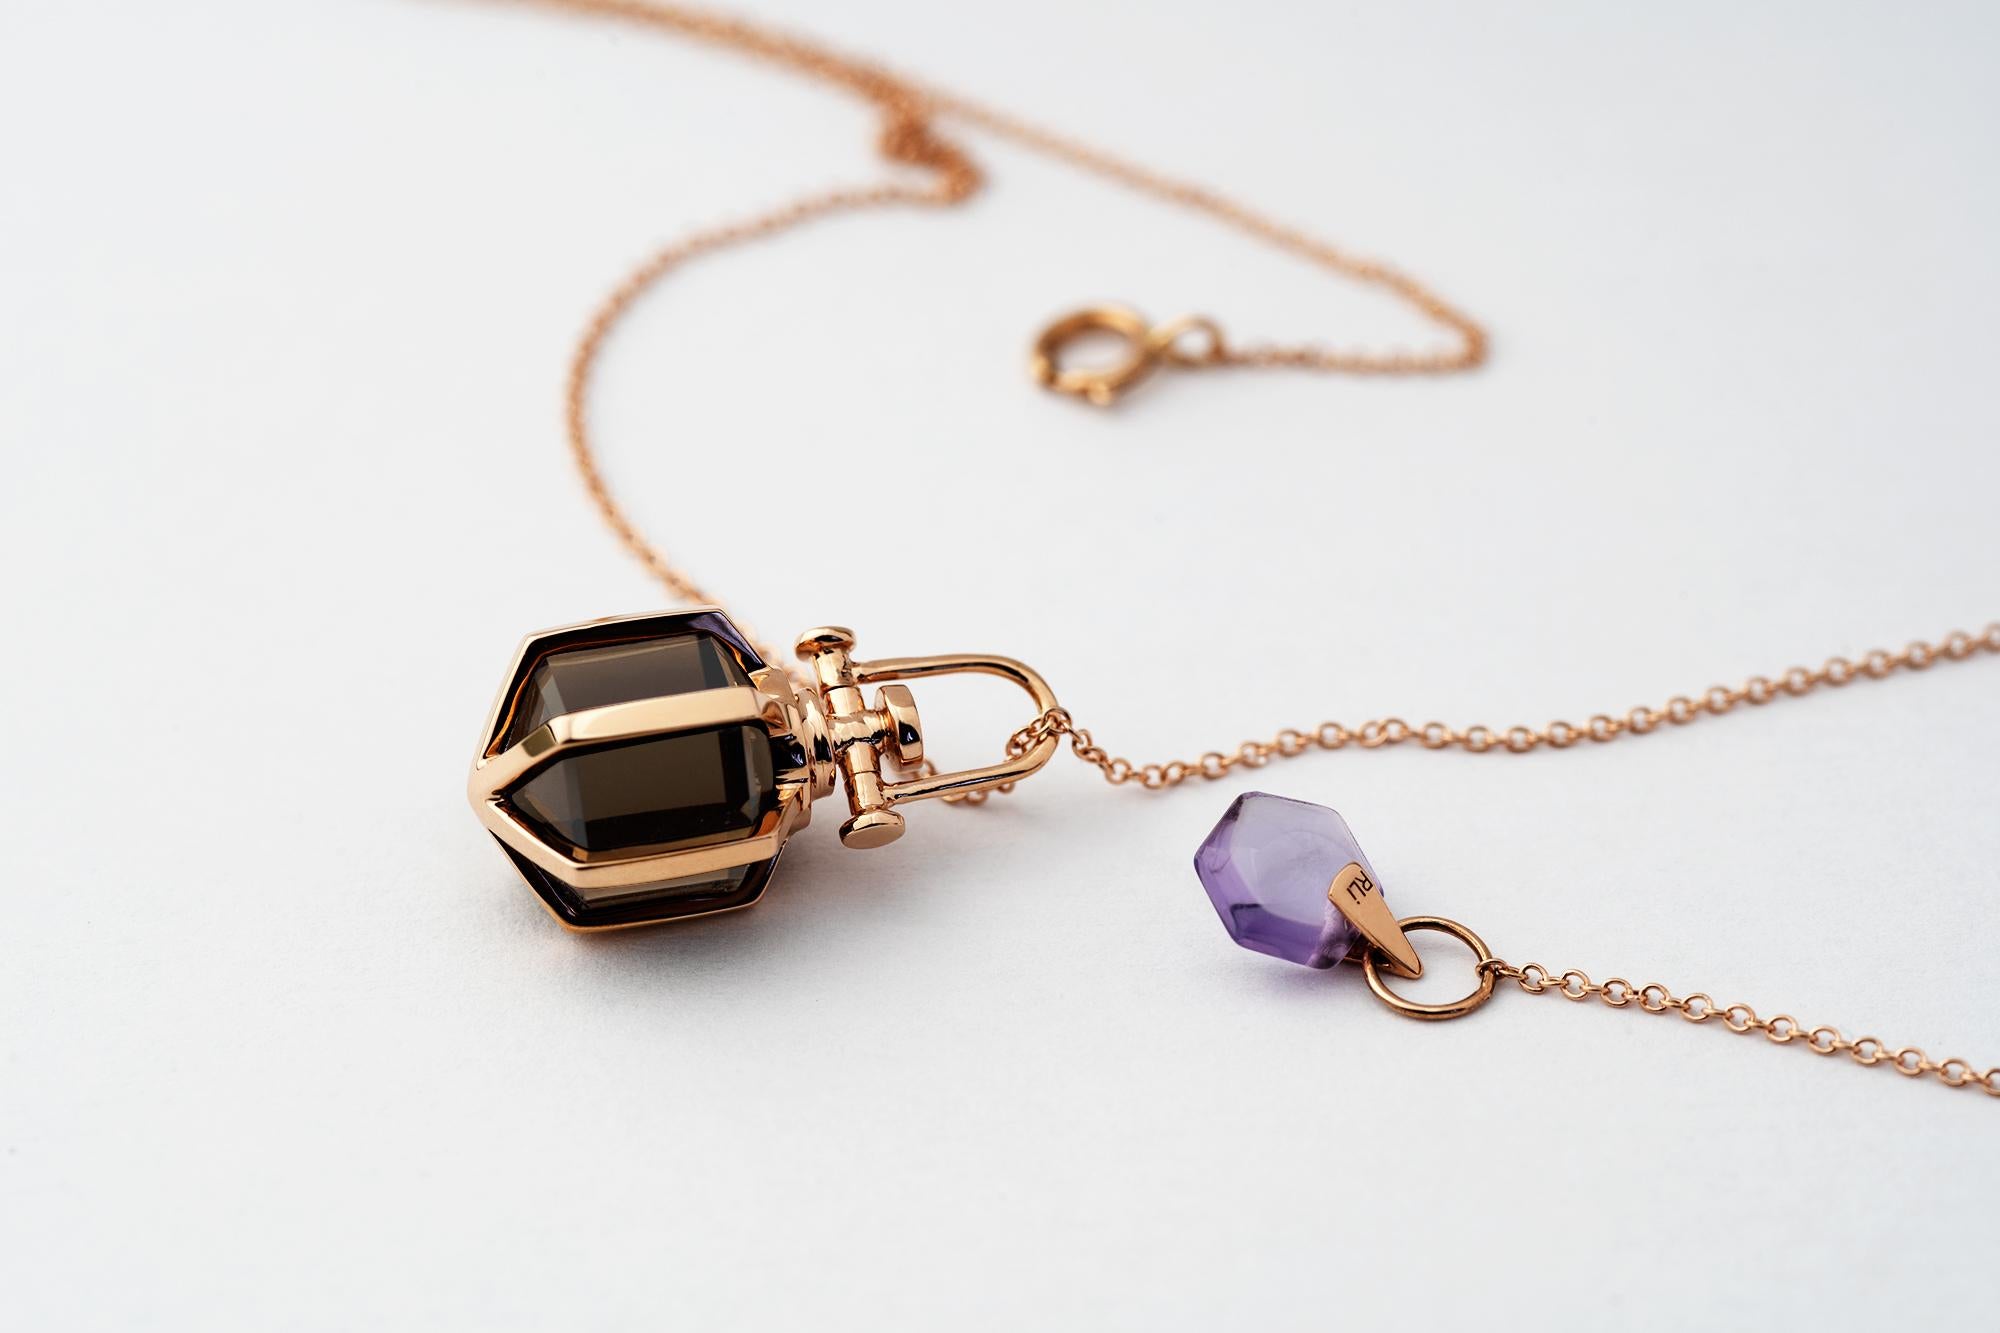 Rebecca Li designs mindfulness.
This dainty talisman necklace is from her signature Six Senses Talisman Collection.

Smoky quartz means Protection & Luck.

Talisman Pendant :
18K Rose Gold
Smoky Quartz
Pendant Size: 10 mm W * 10 mm D * 18 mm